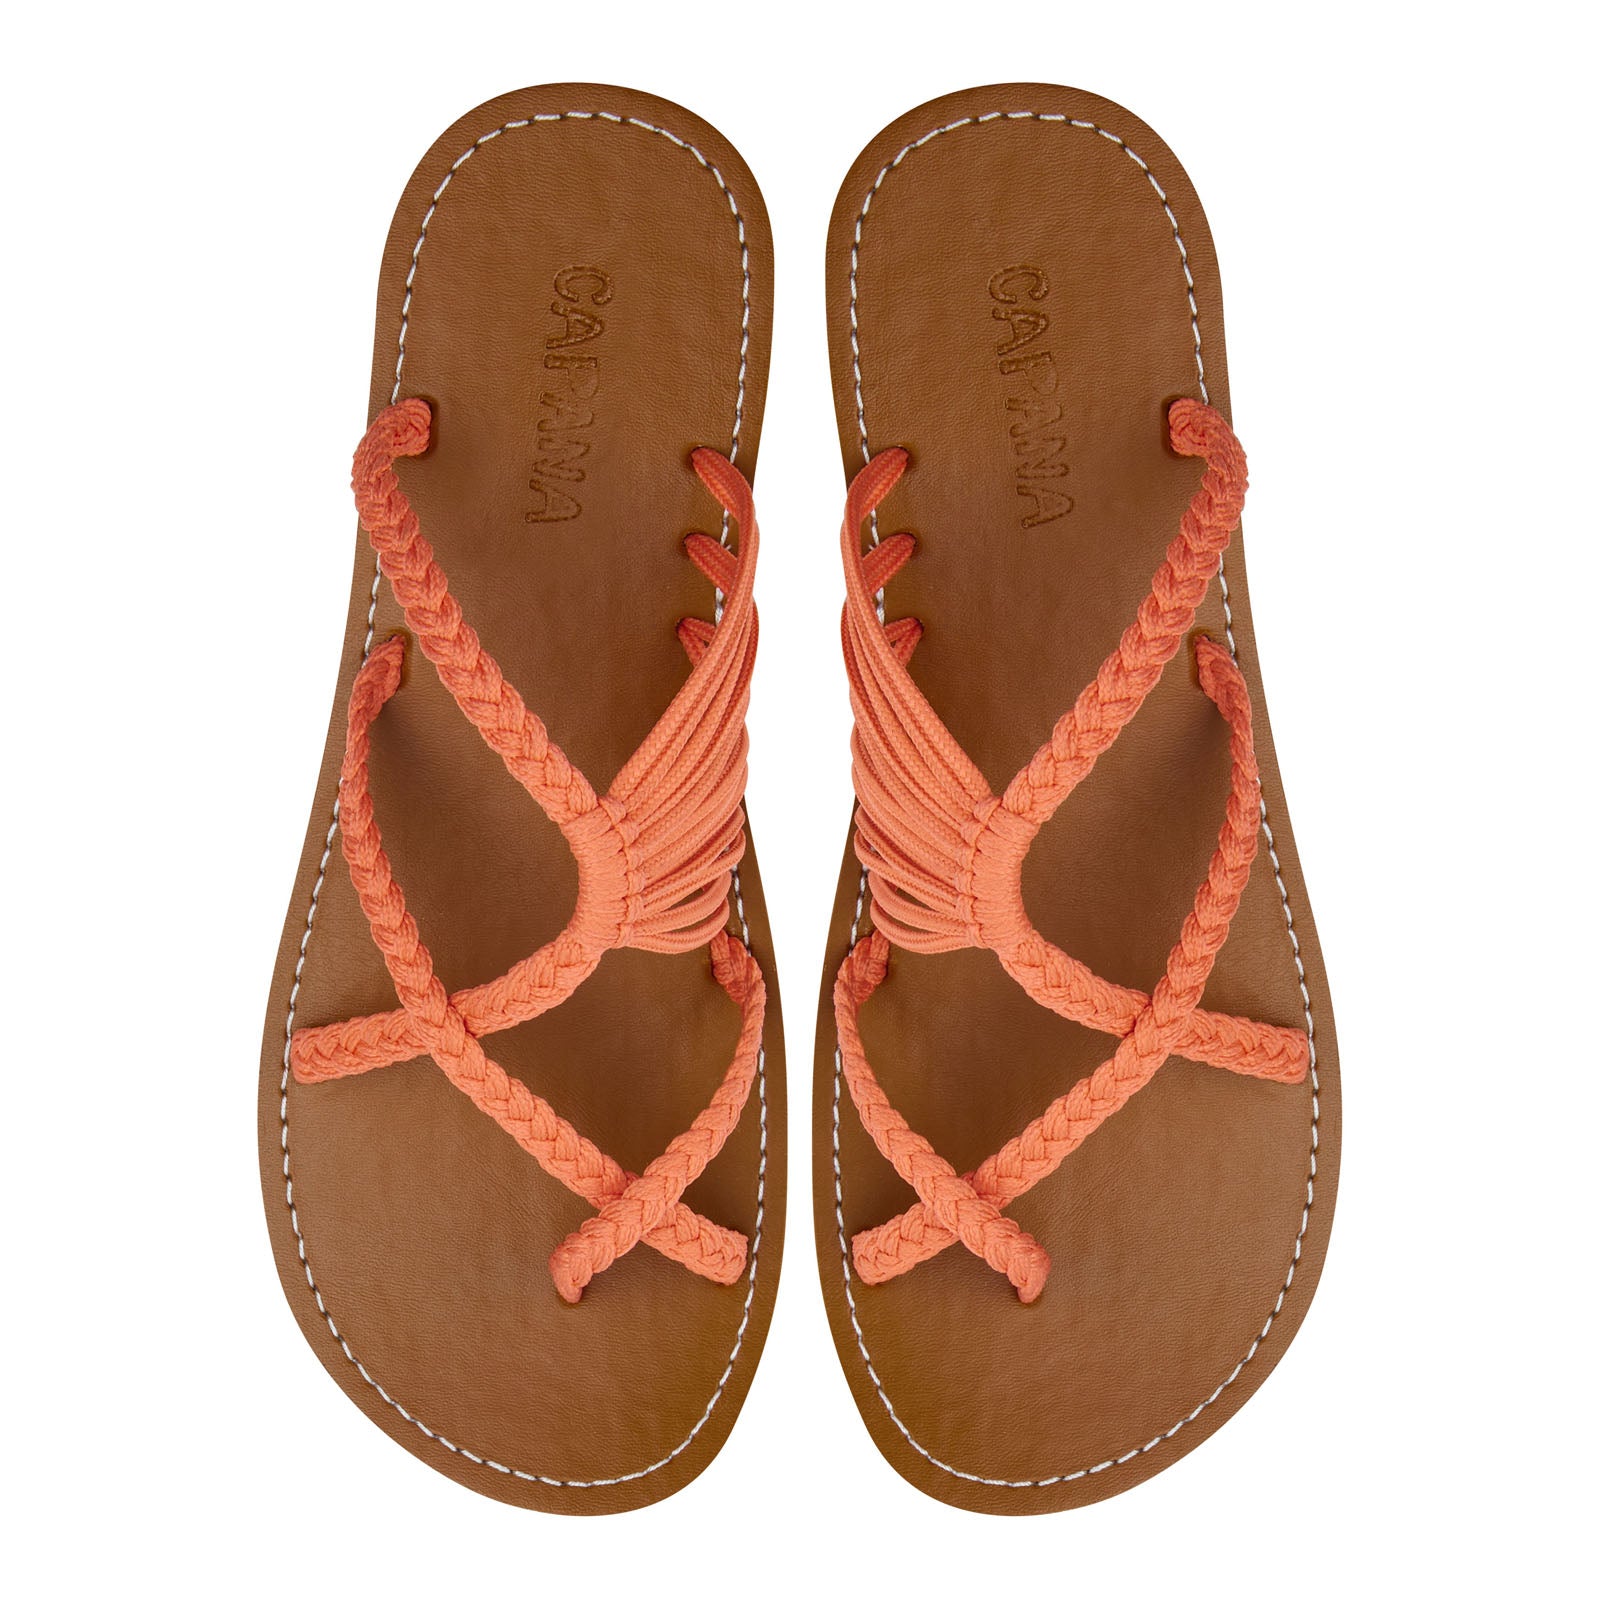 Oceanbliss Salmon Rope Sandals Coral Crisscross design Flat Handmade sandals for women